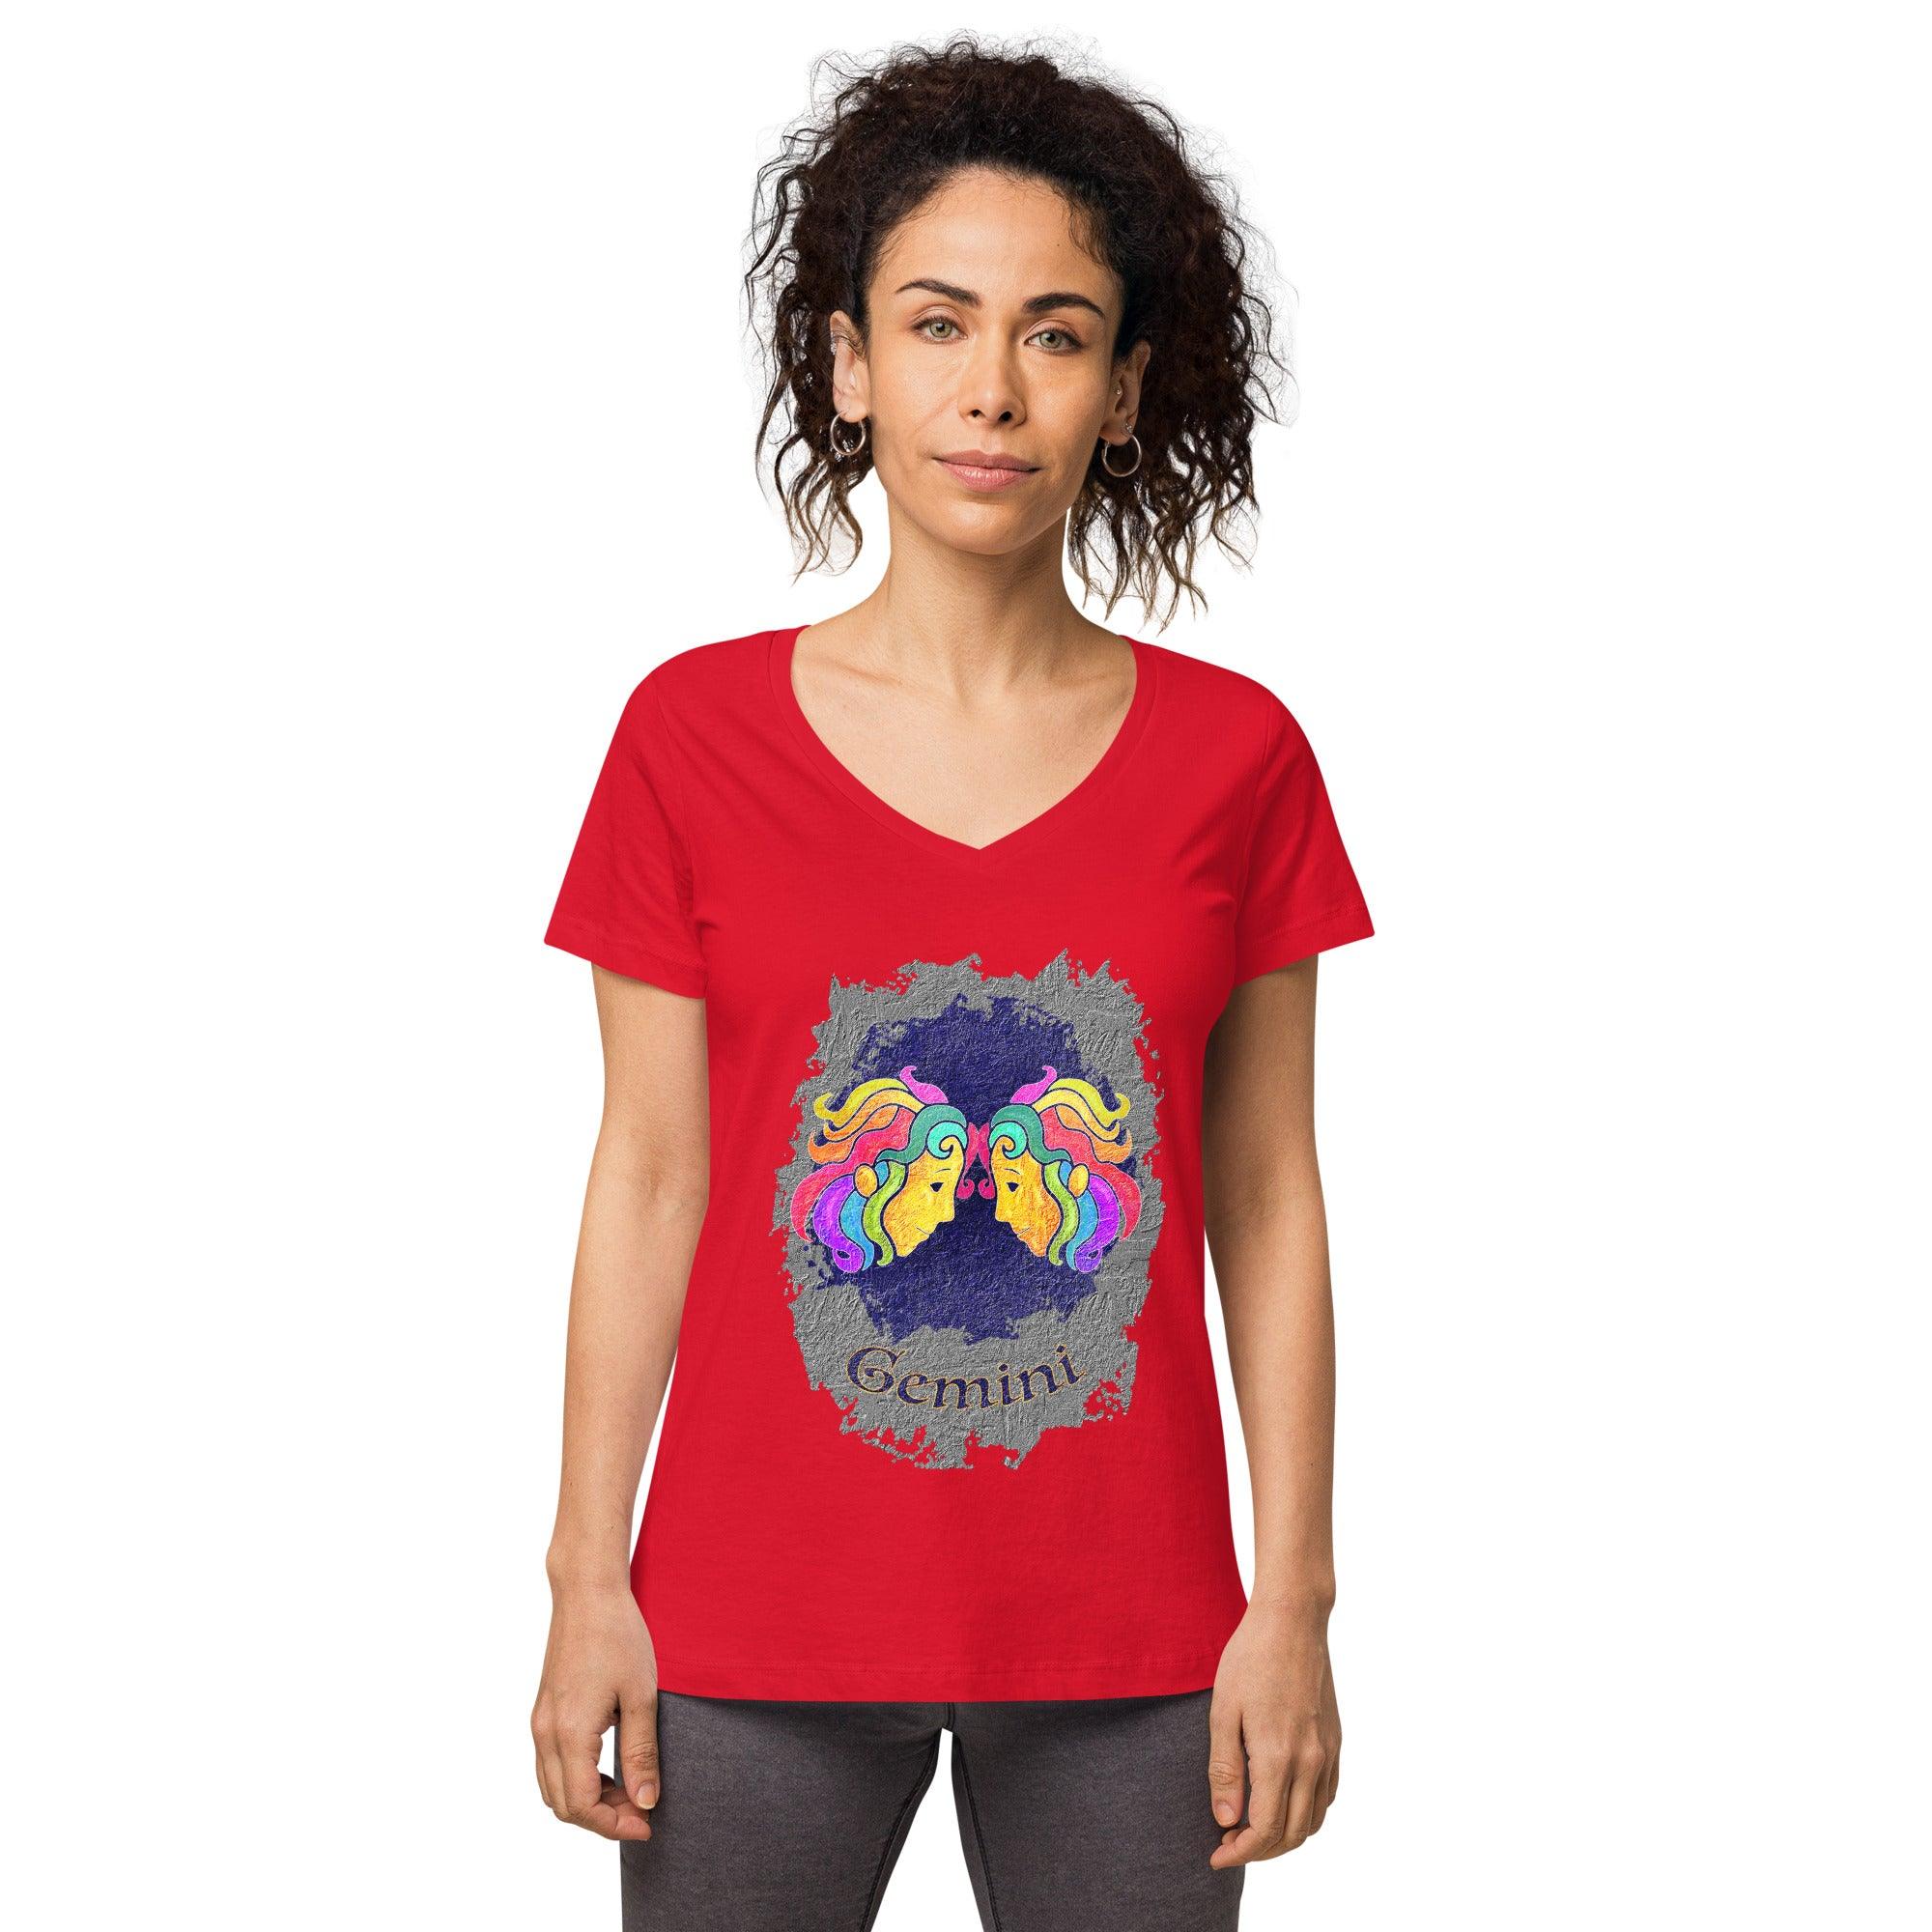 Gemini Women’s Fitted V-neck T-shirt | Zodiac Series 11 - Beyond T-shirts